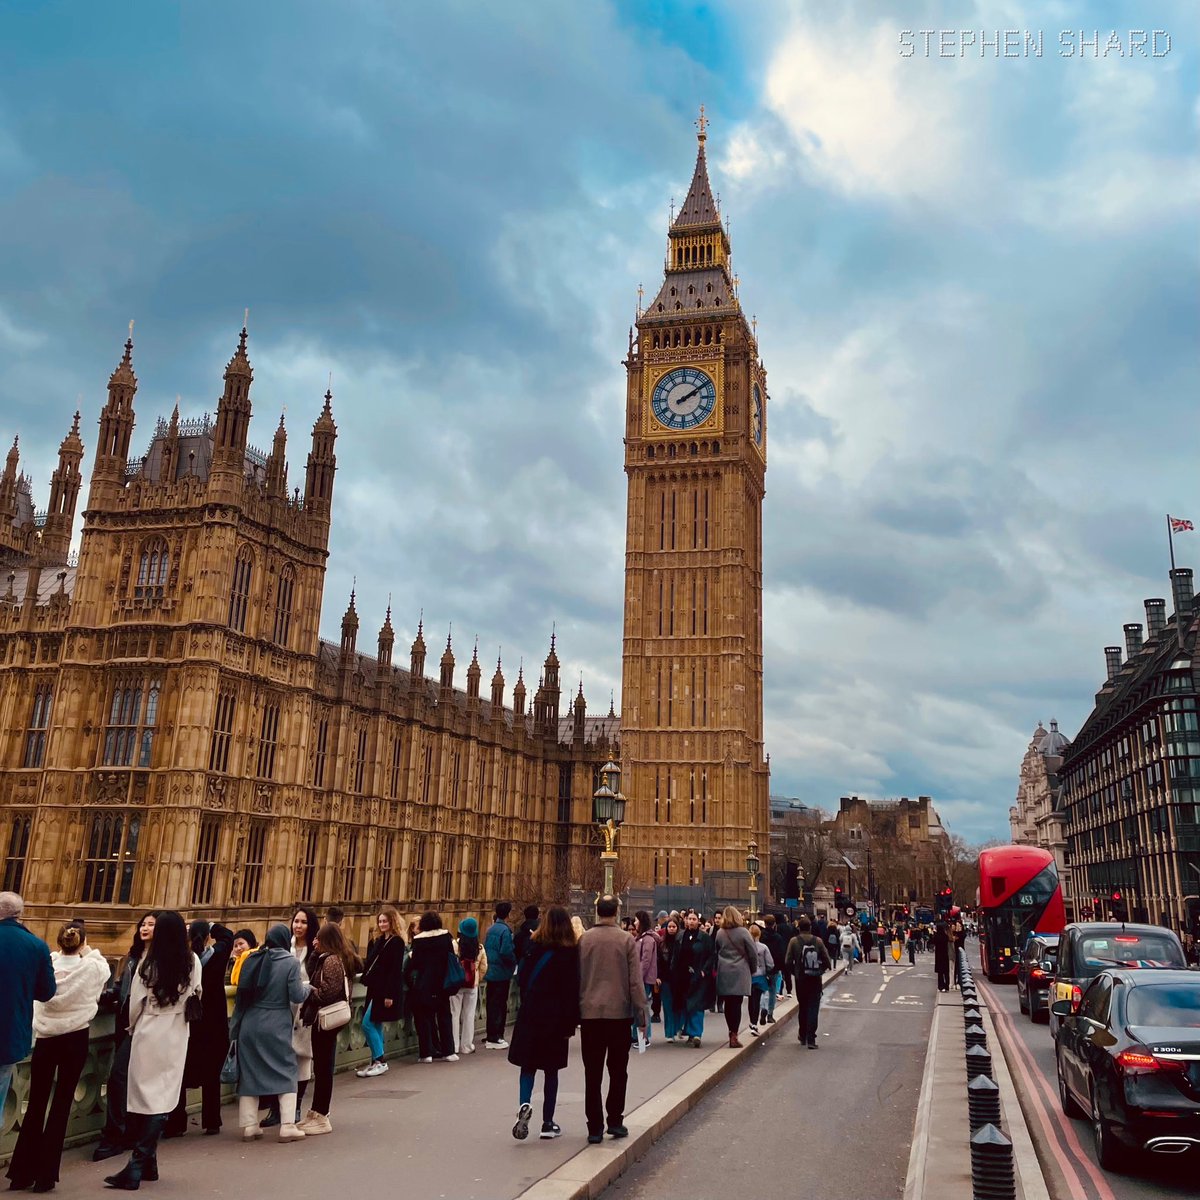 Big Ben Clock / Elizabeth Tower 🕰️

London, England 🇬🇧

📸 16th February 2024 | Stephen Shard

#LondonLandmarks #HousesofParliament #ElizabethTower #BigBenClockTower #BigBen